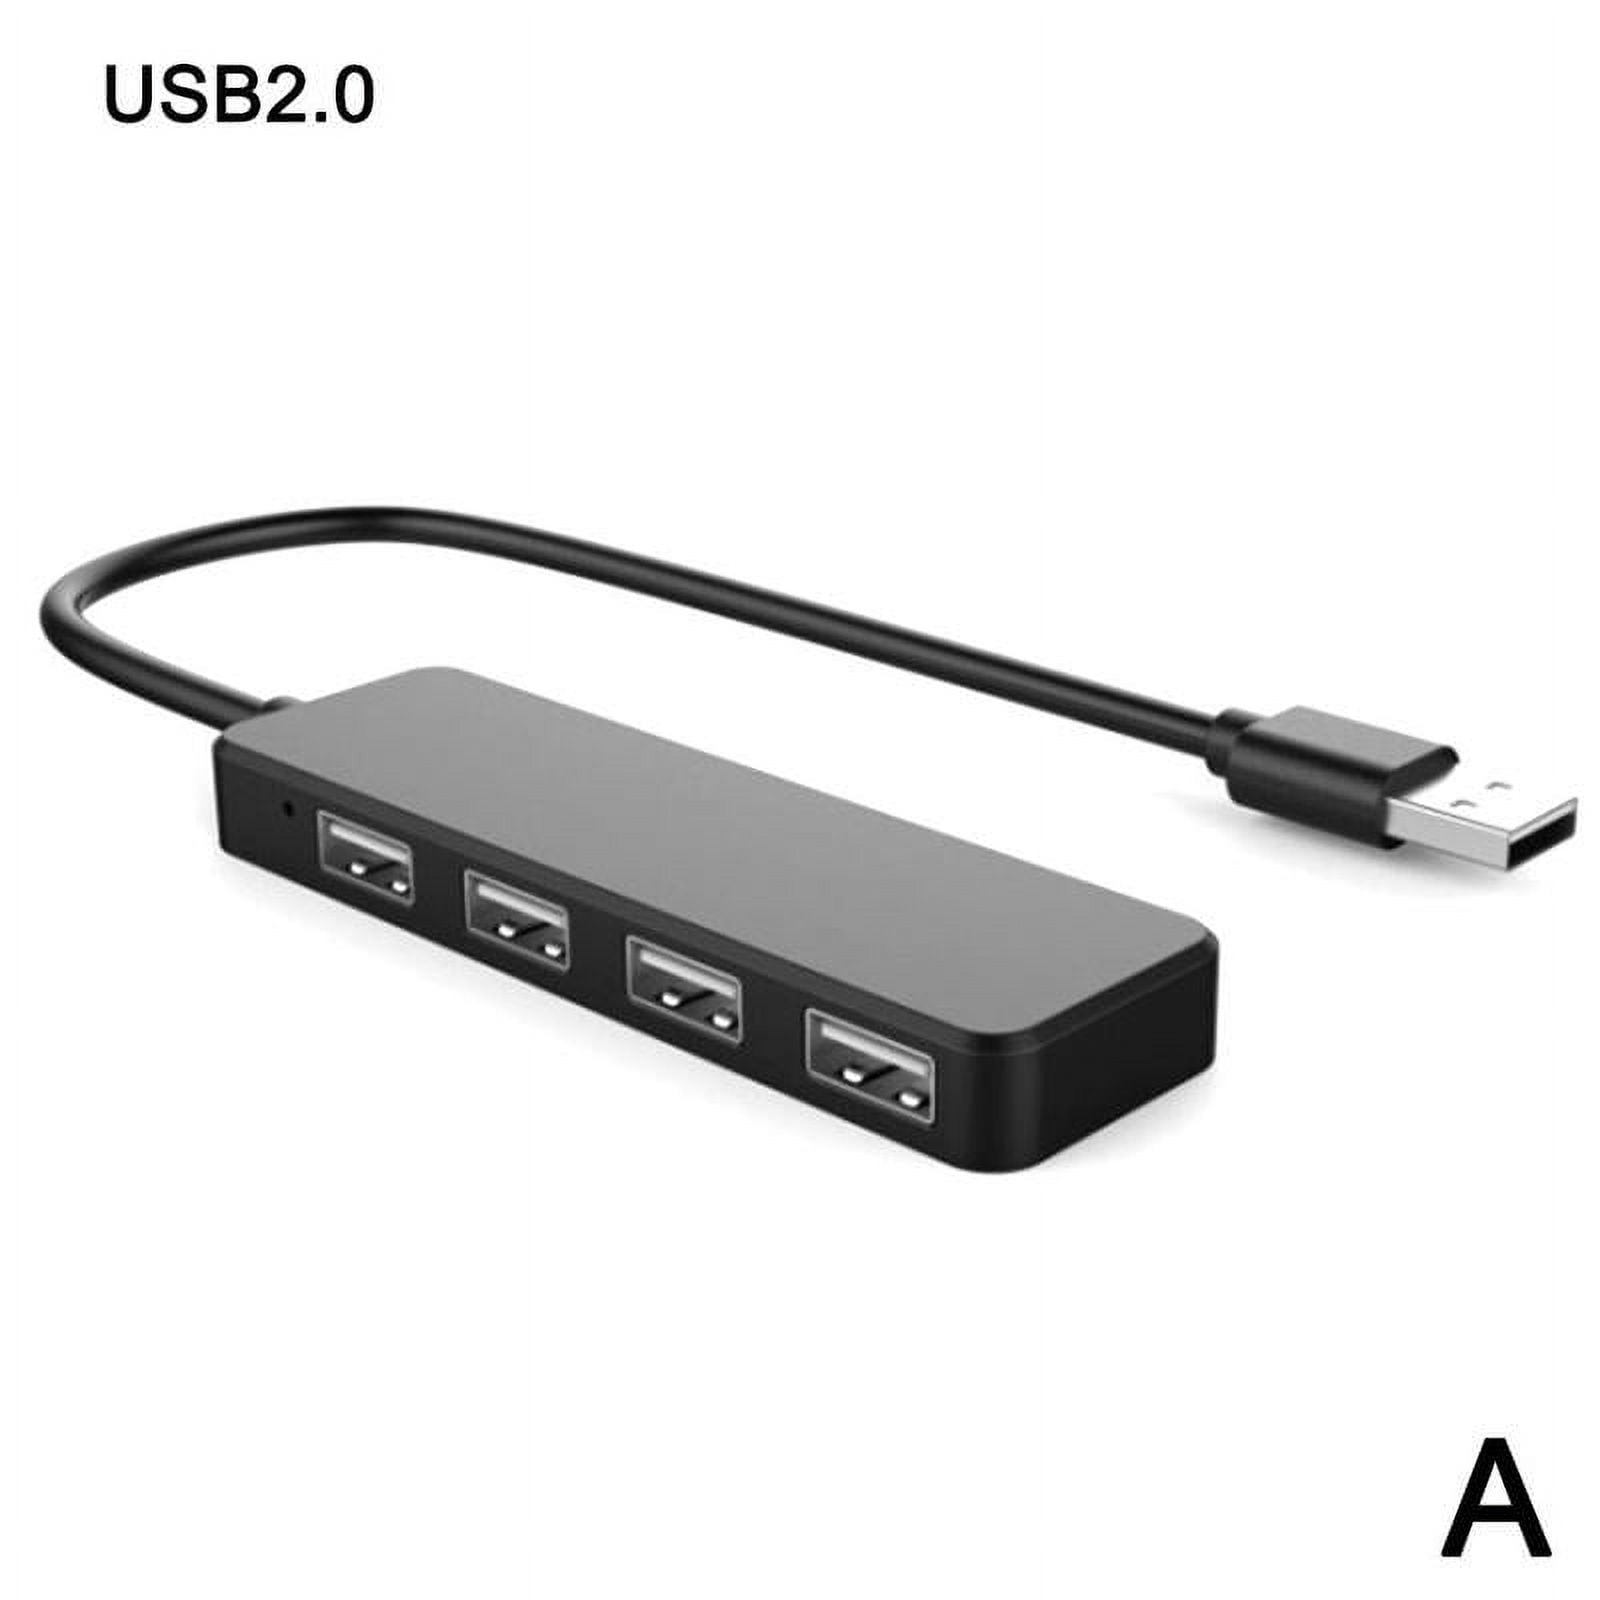  USB Hub 3.0,7 Port USB Hub with 5 Gbps USB Splitter for PS4 PS5  Laptop MacBook Mac Pro Mac Mini iMac Surface Pro XPS PC Flash Drive Mobile  HDD : Electronics